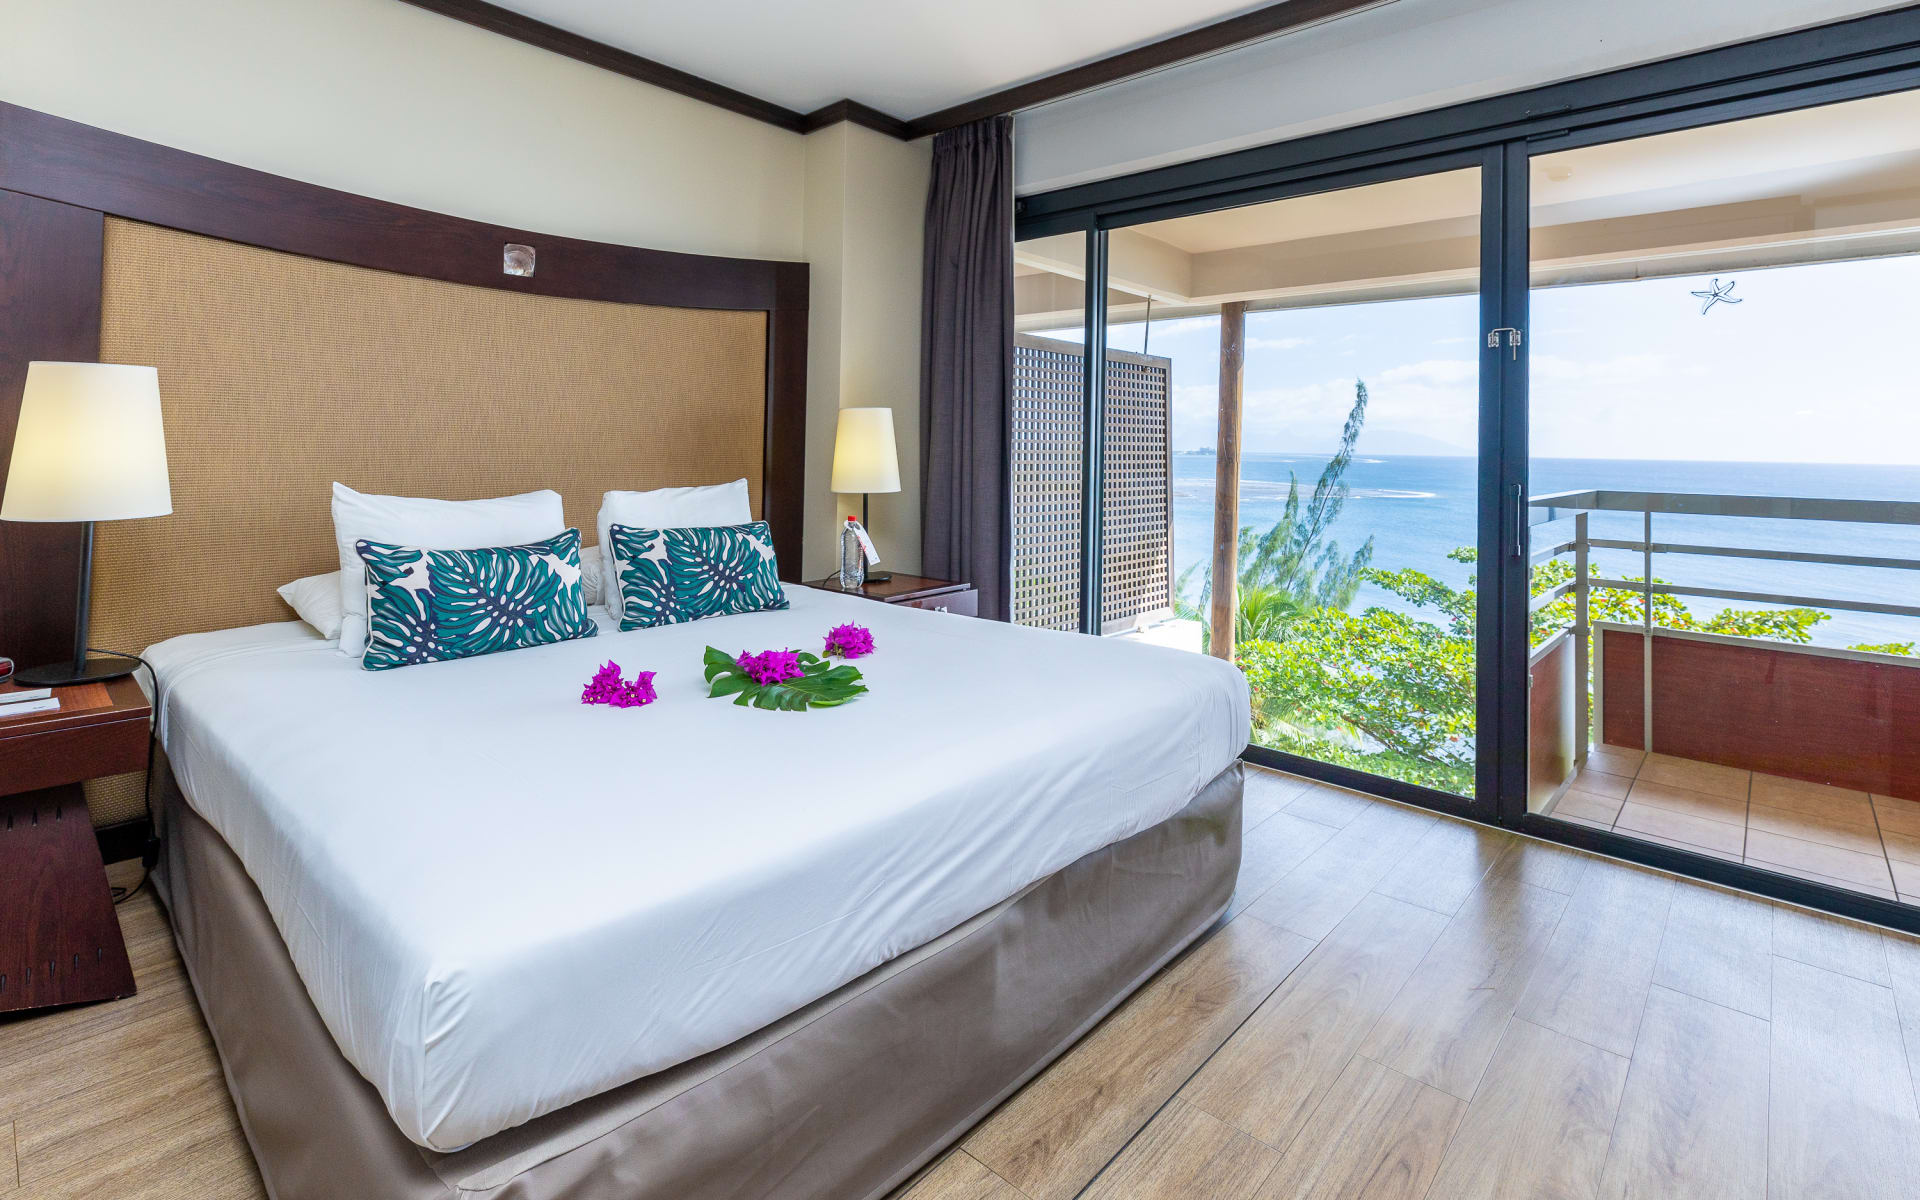 Premium Duplex bedroom with stunning balcony views of the ocean